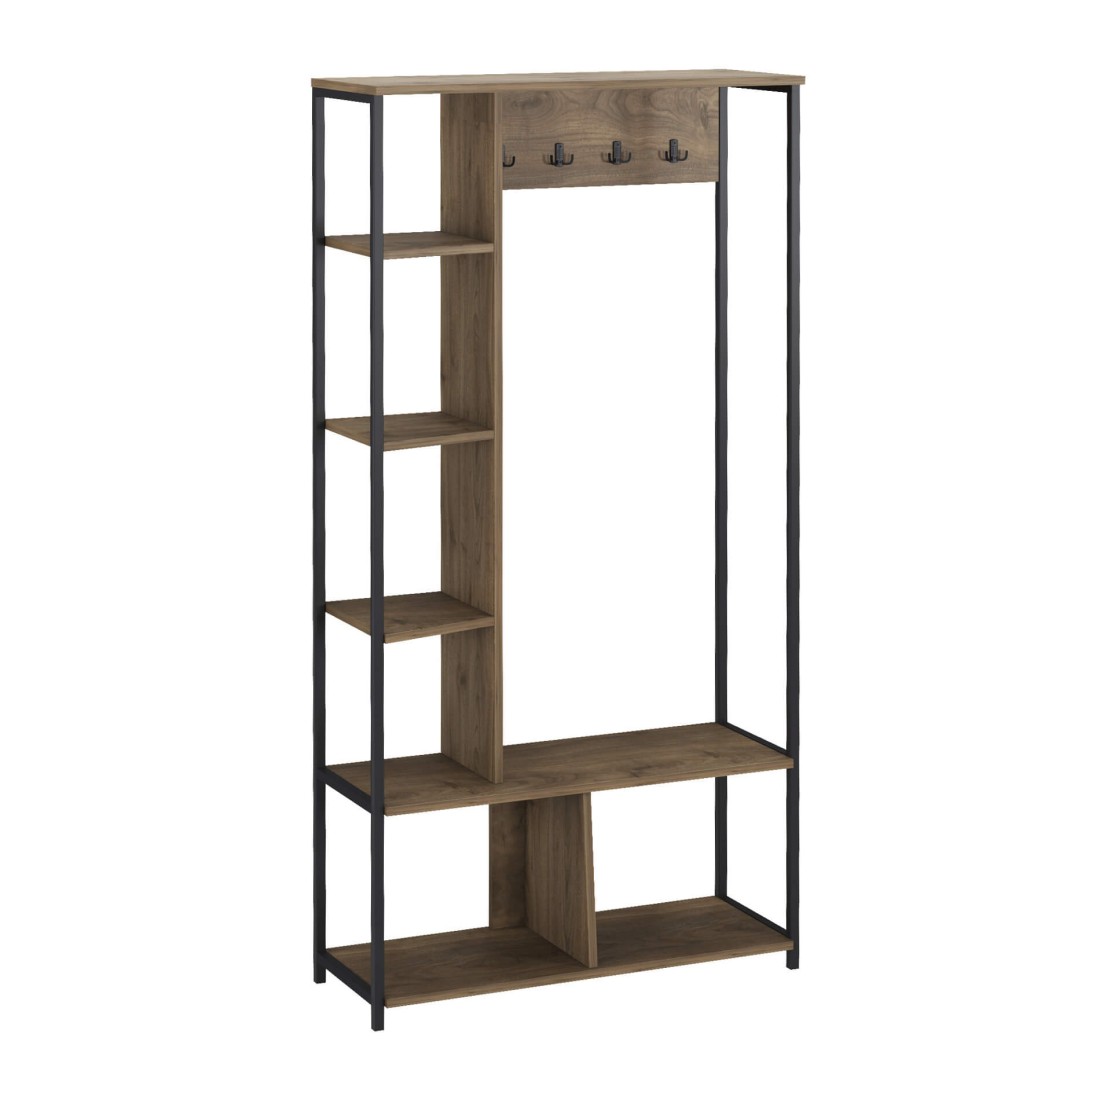 Moringa - Dark brown freestanding coat rack with 5 shelves